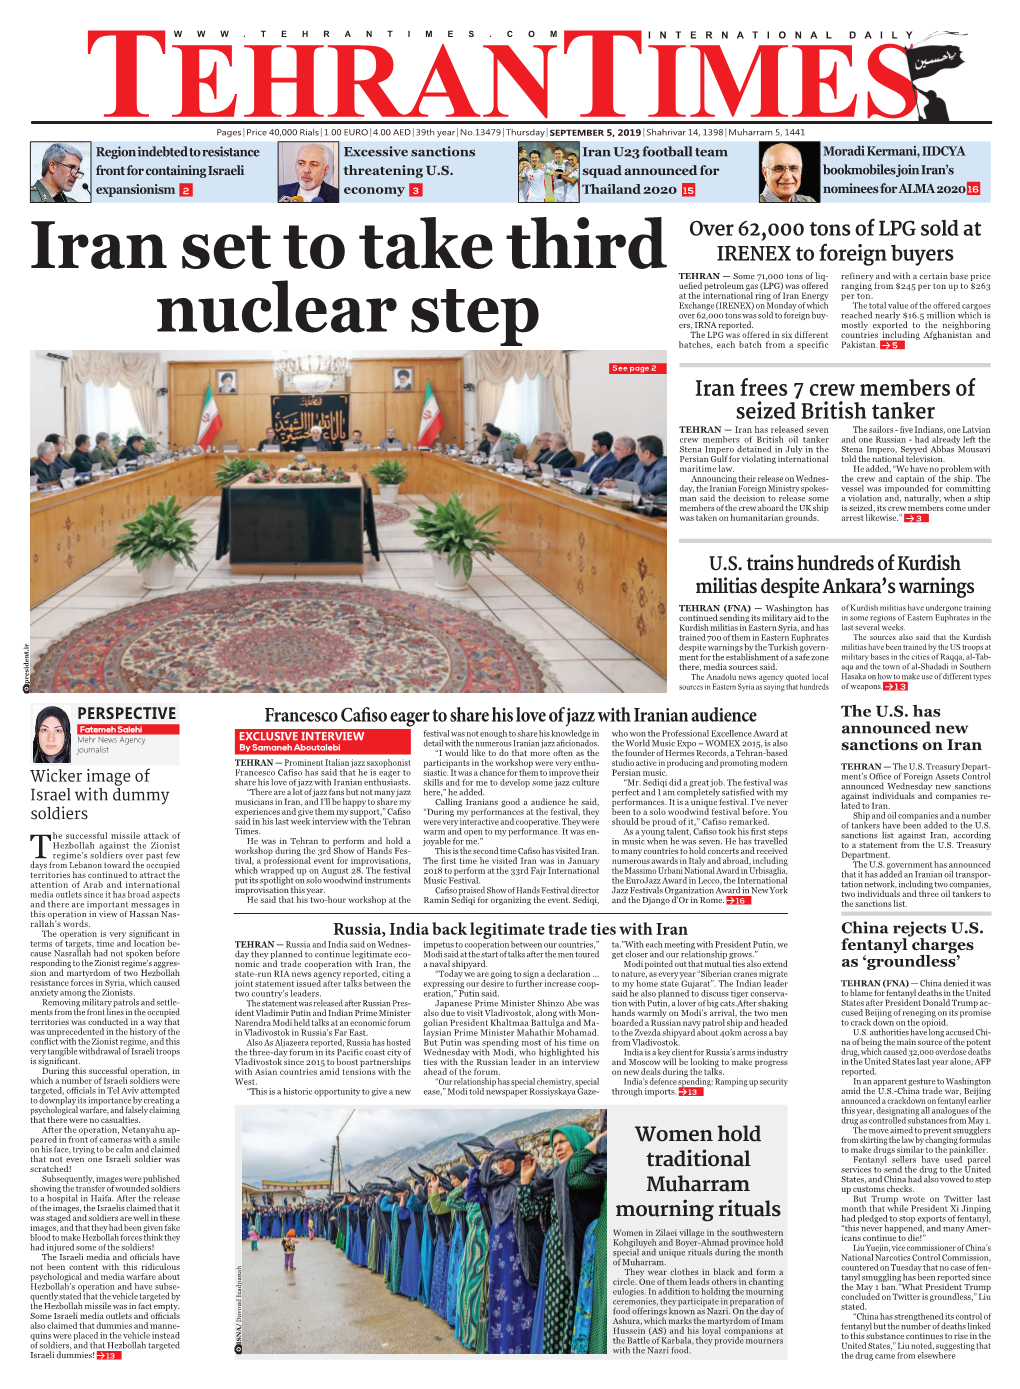 Iran Set to Take Third Nuclear Step